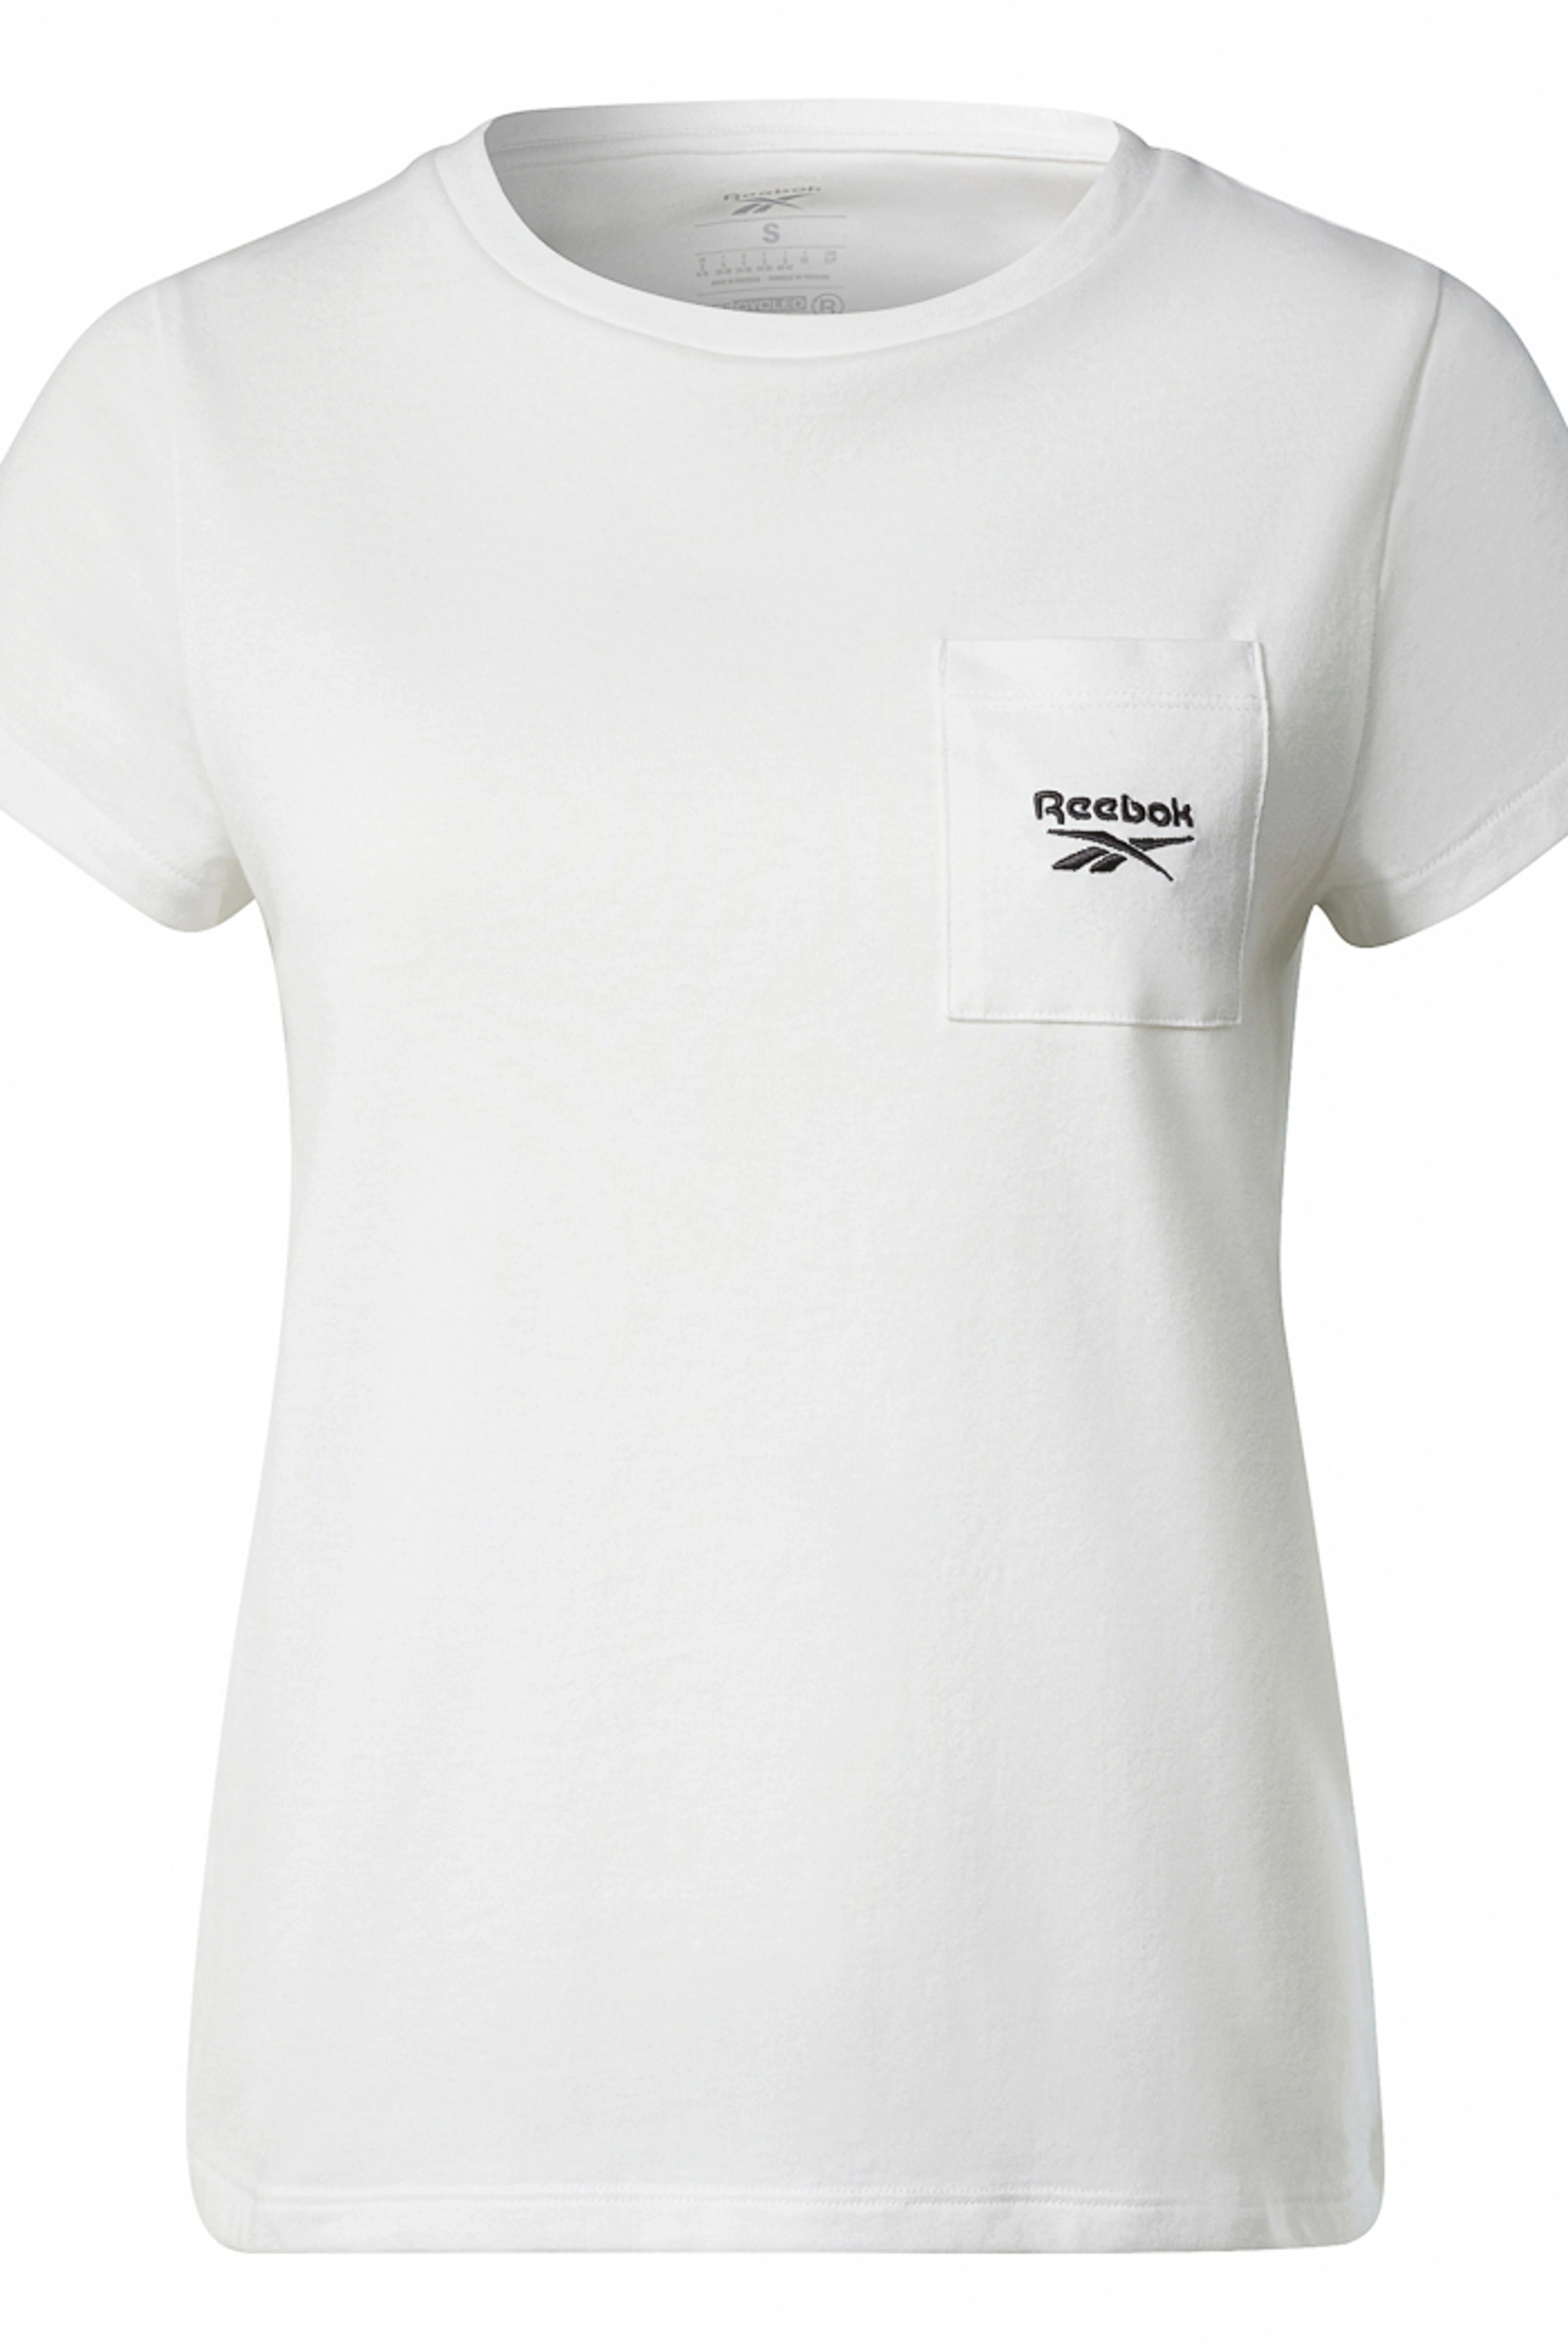 Reebok Identity Pocket T-Shirt